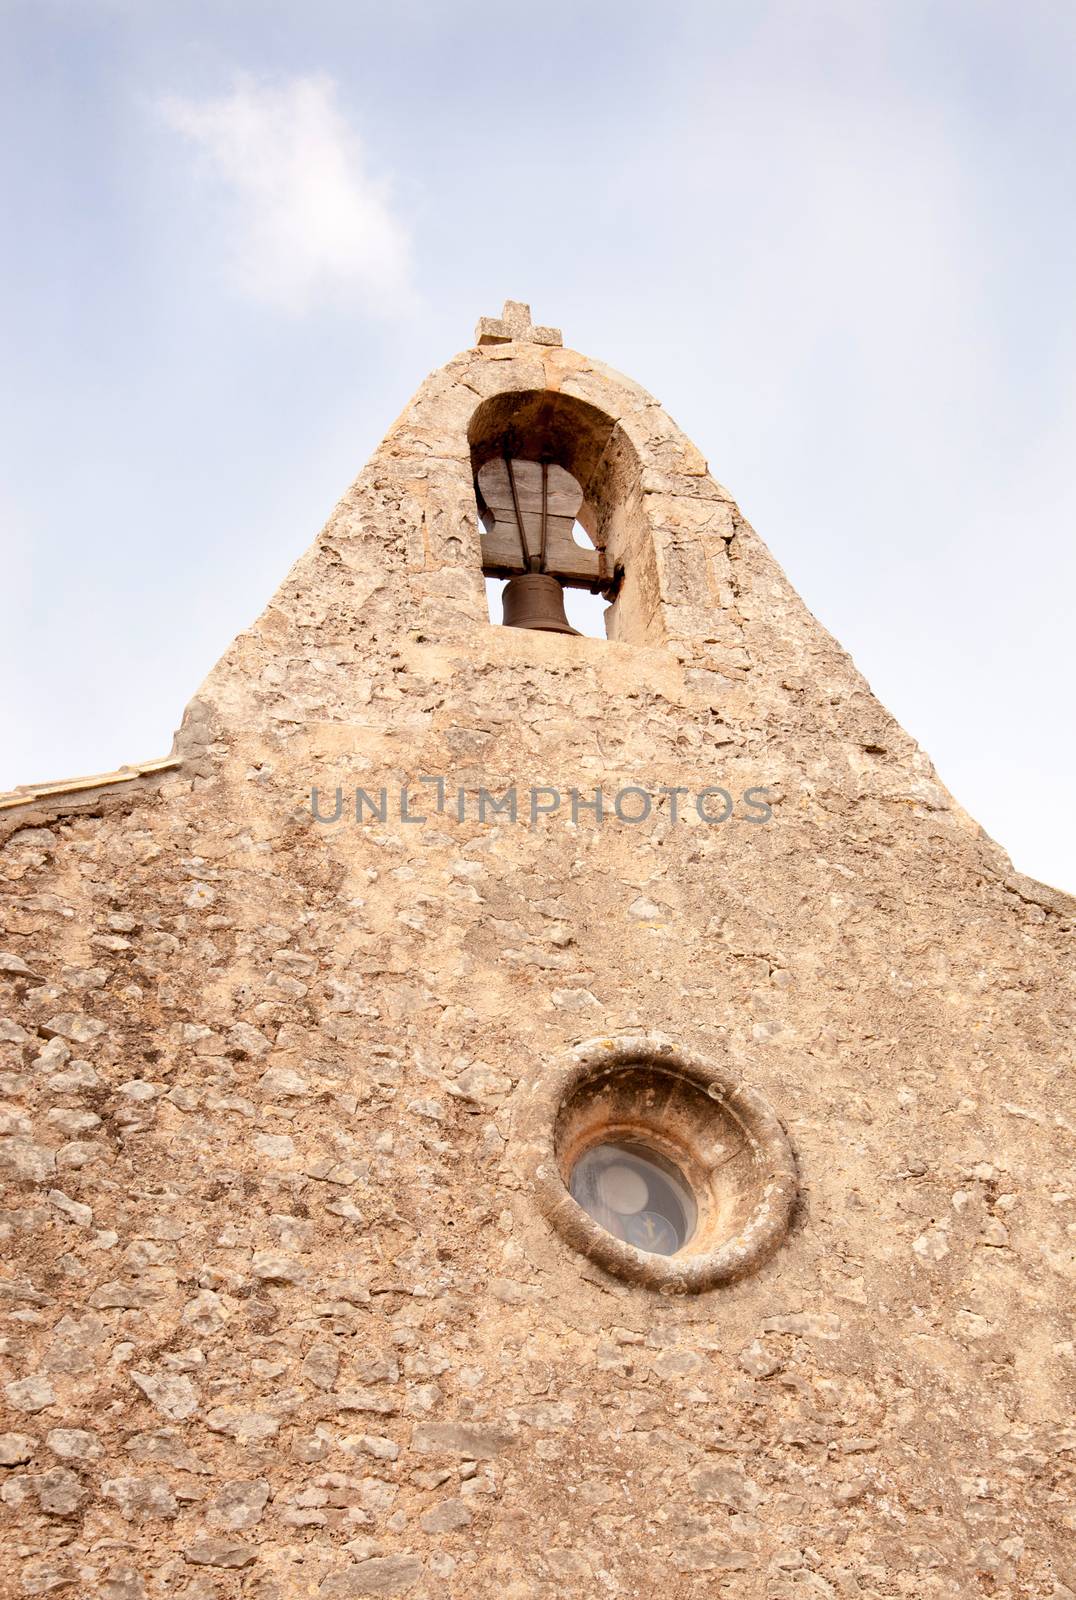 Campanile with belfry at the monastery Santuari de Cura in Randa, Majorca, Balearic islands, Spain.